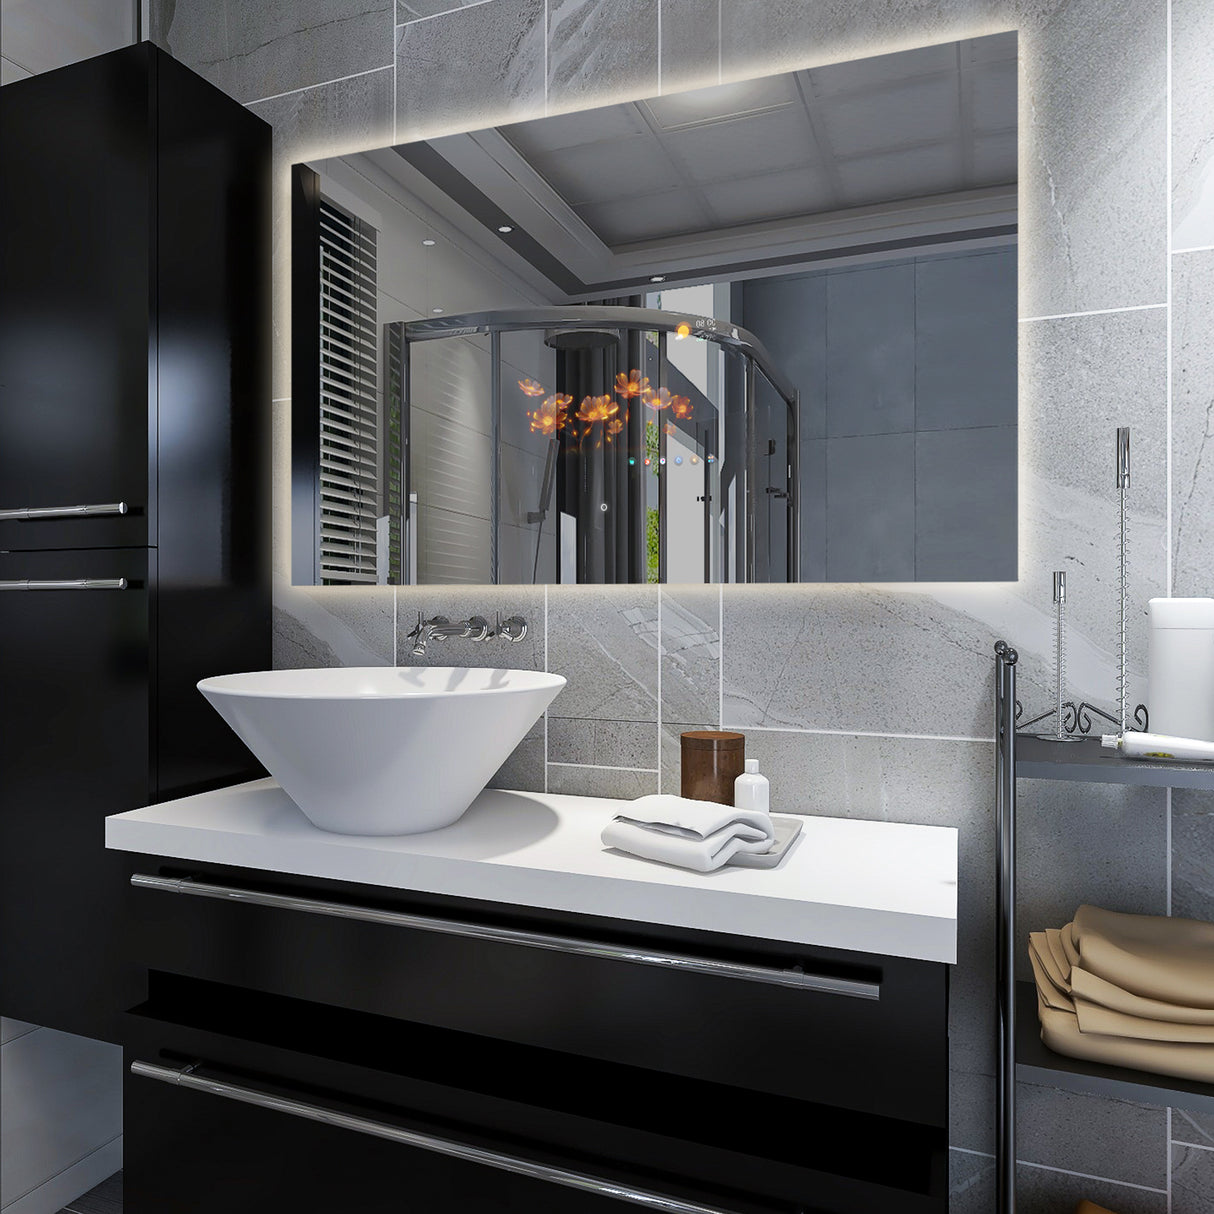 Iris | smart Bathroom Led Mirror Built-in Screen Bathroom Mirror